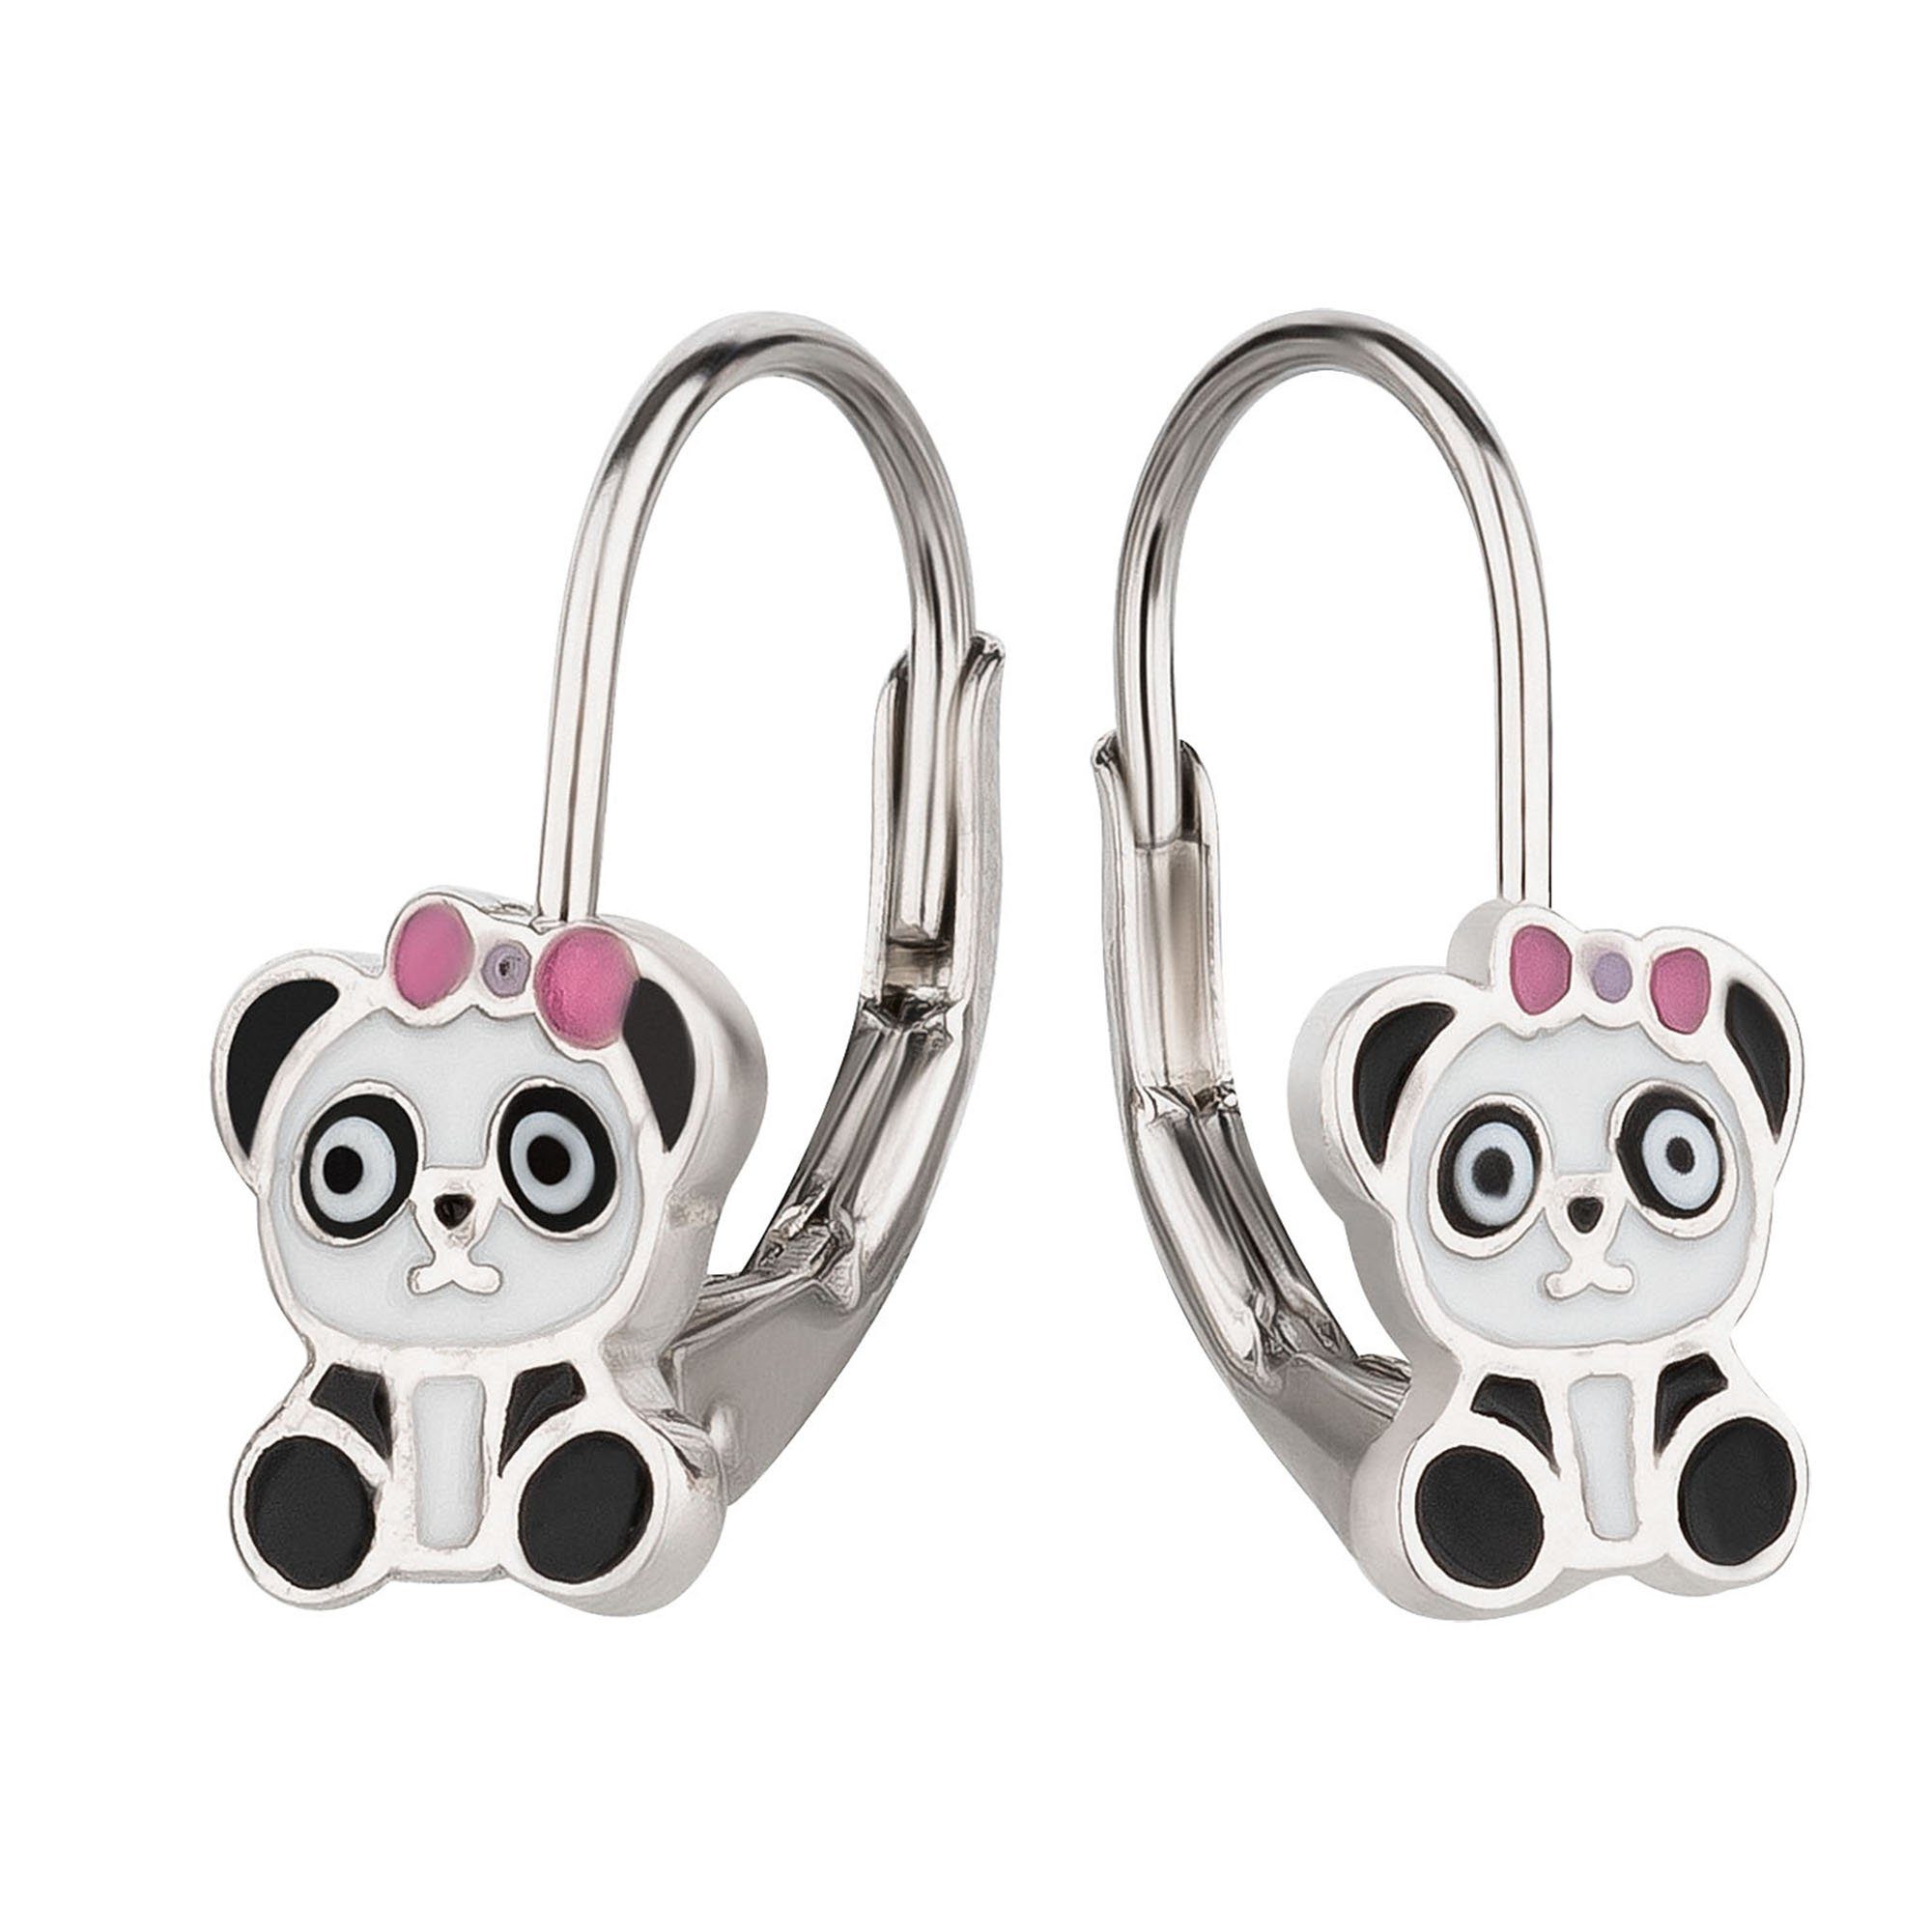 schmuck23 Paar Ohrhänger Kinder Ohrringe Panda Bär 925 Silber Mädchen, Mädchen Kinderschmuck echte Silberohrringe